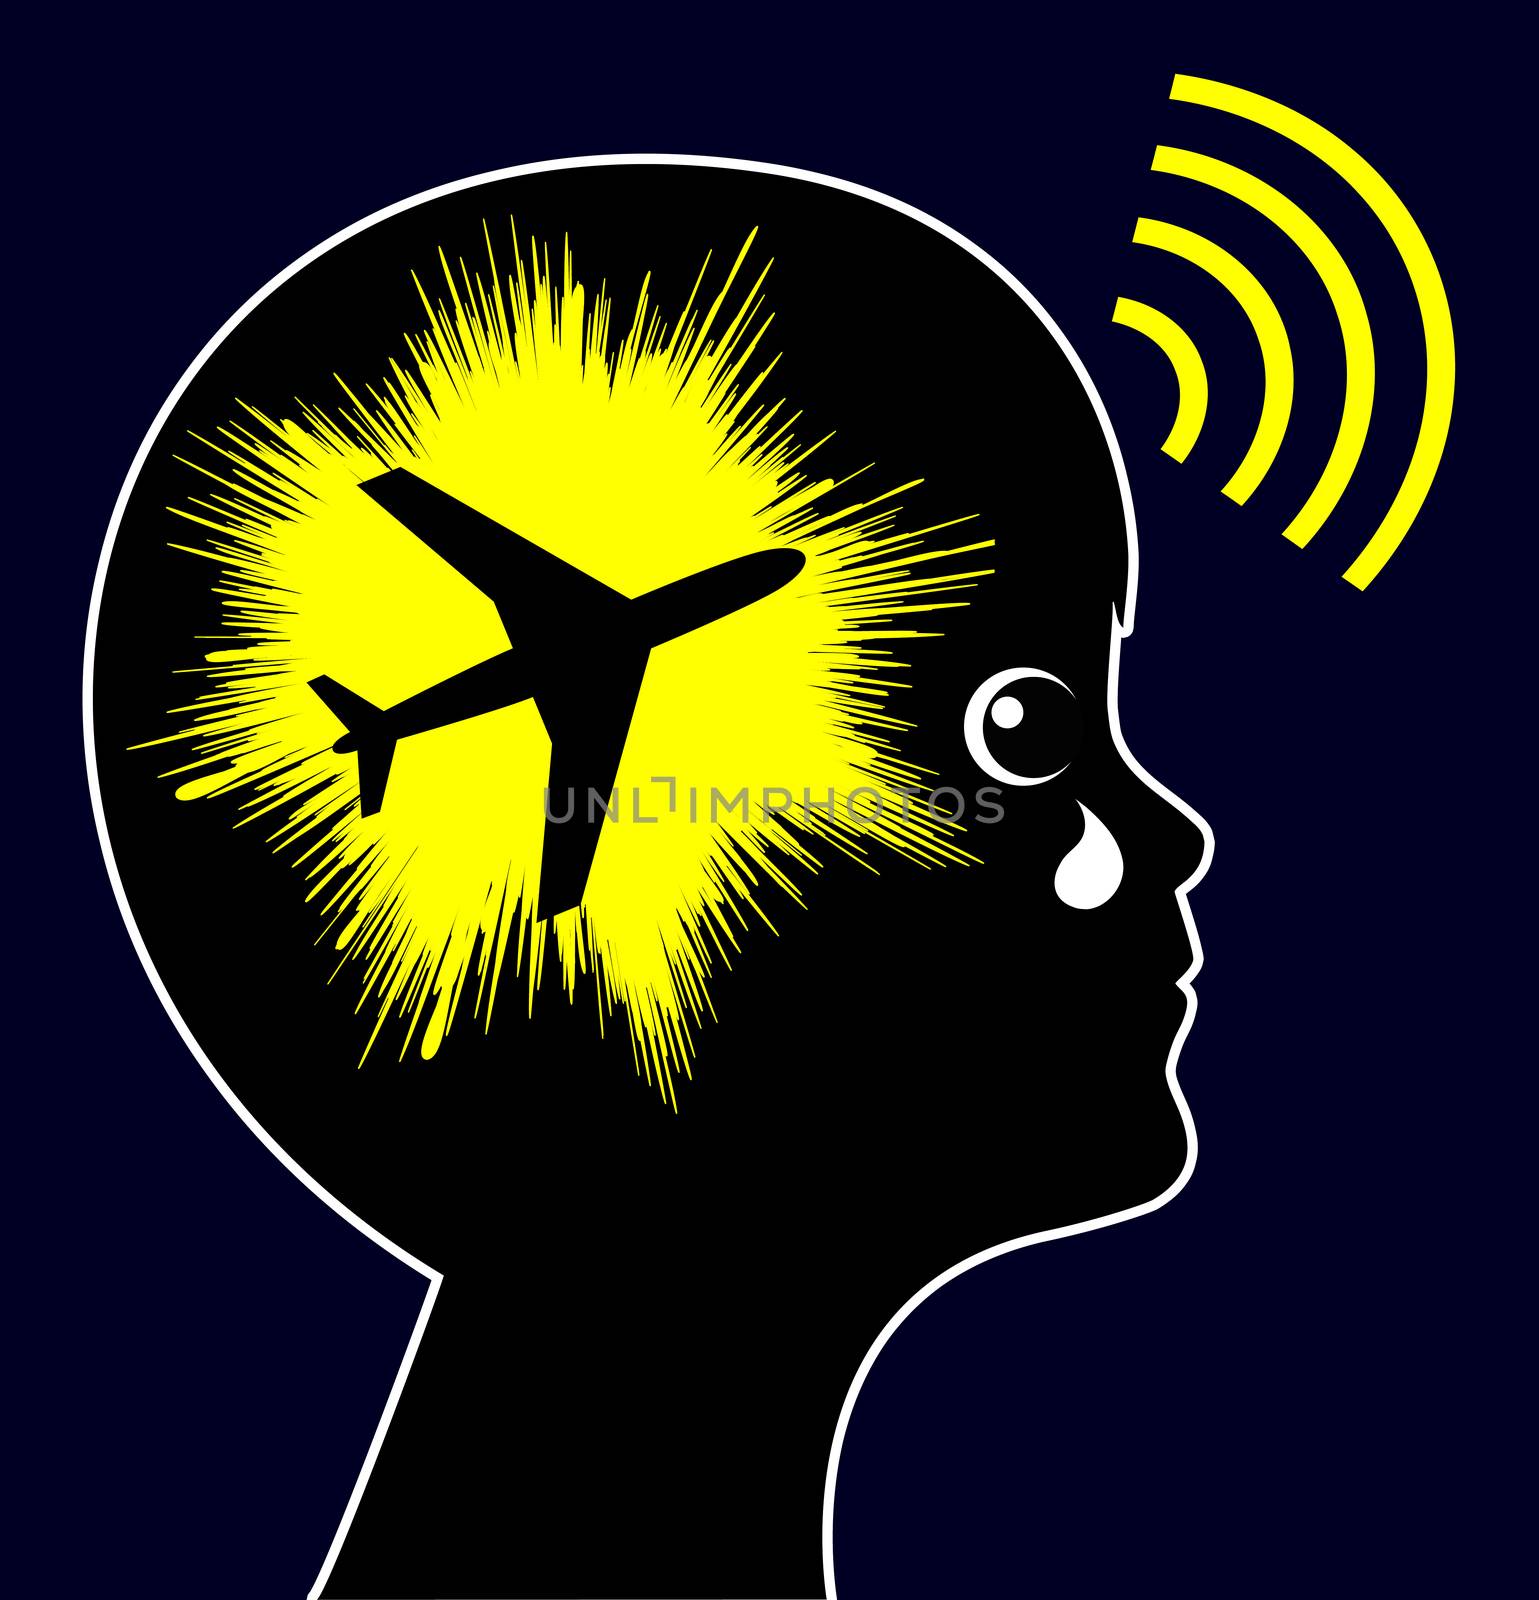 Aircraft Noise Exposure by Bambara